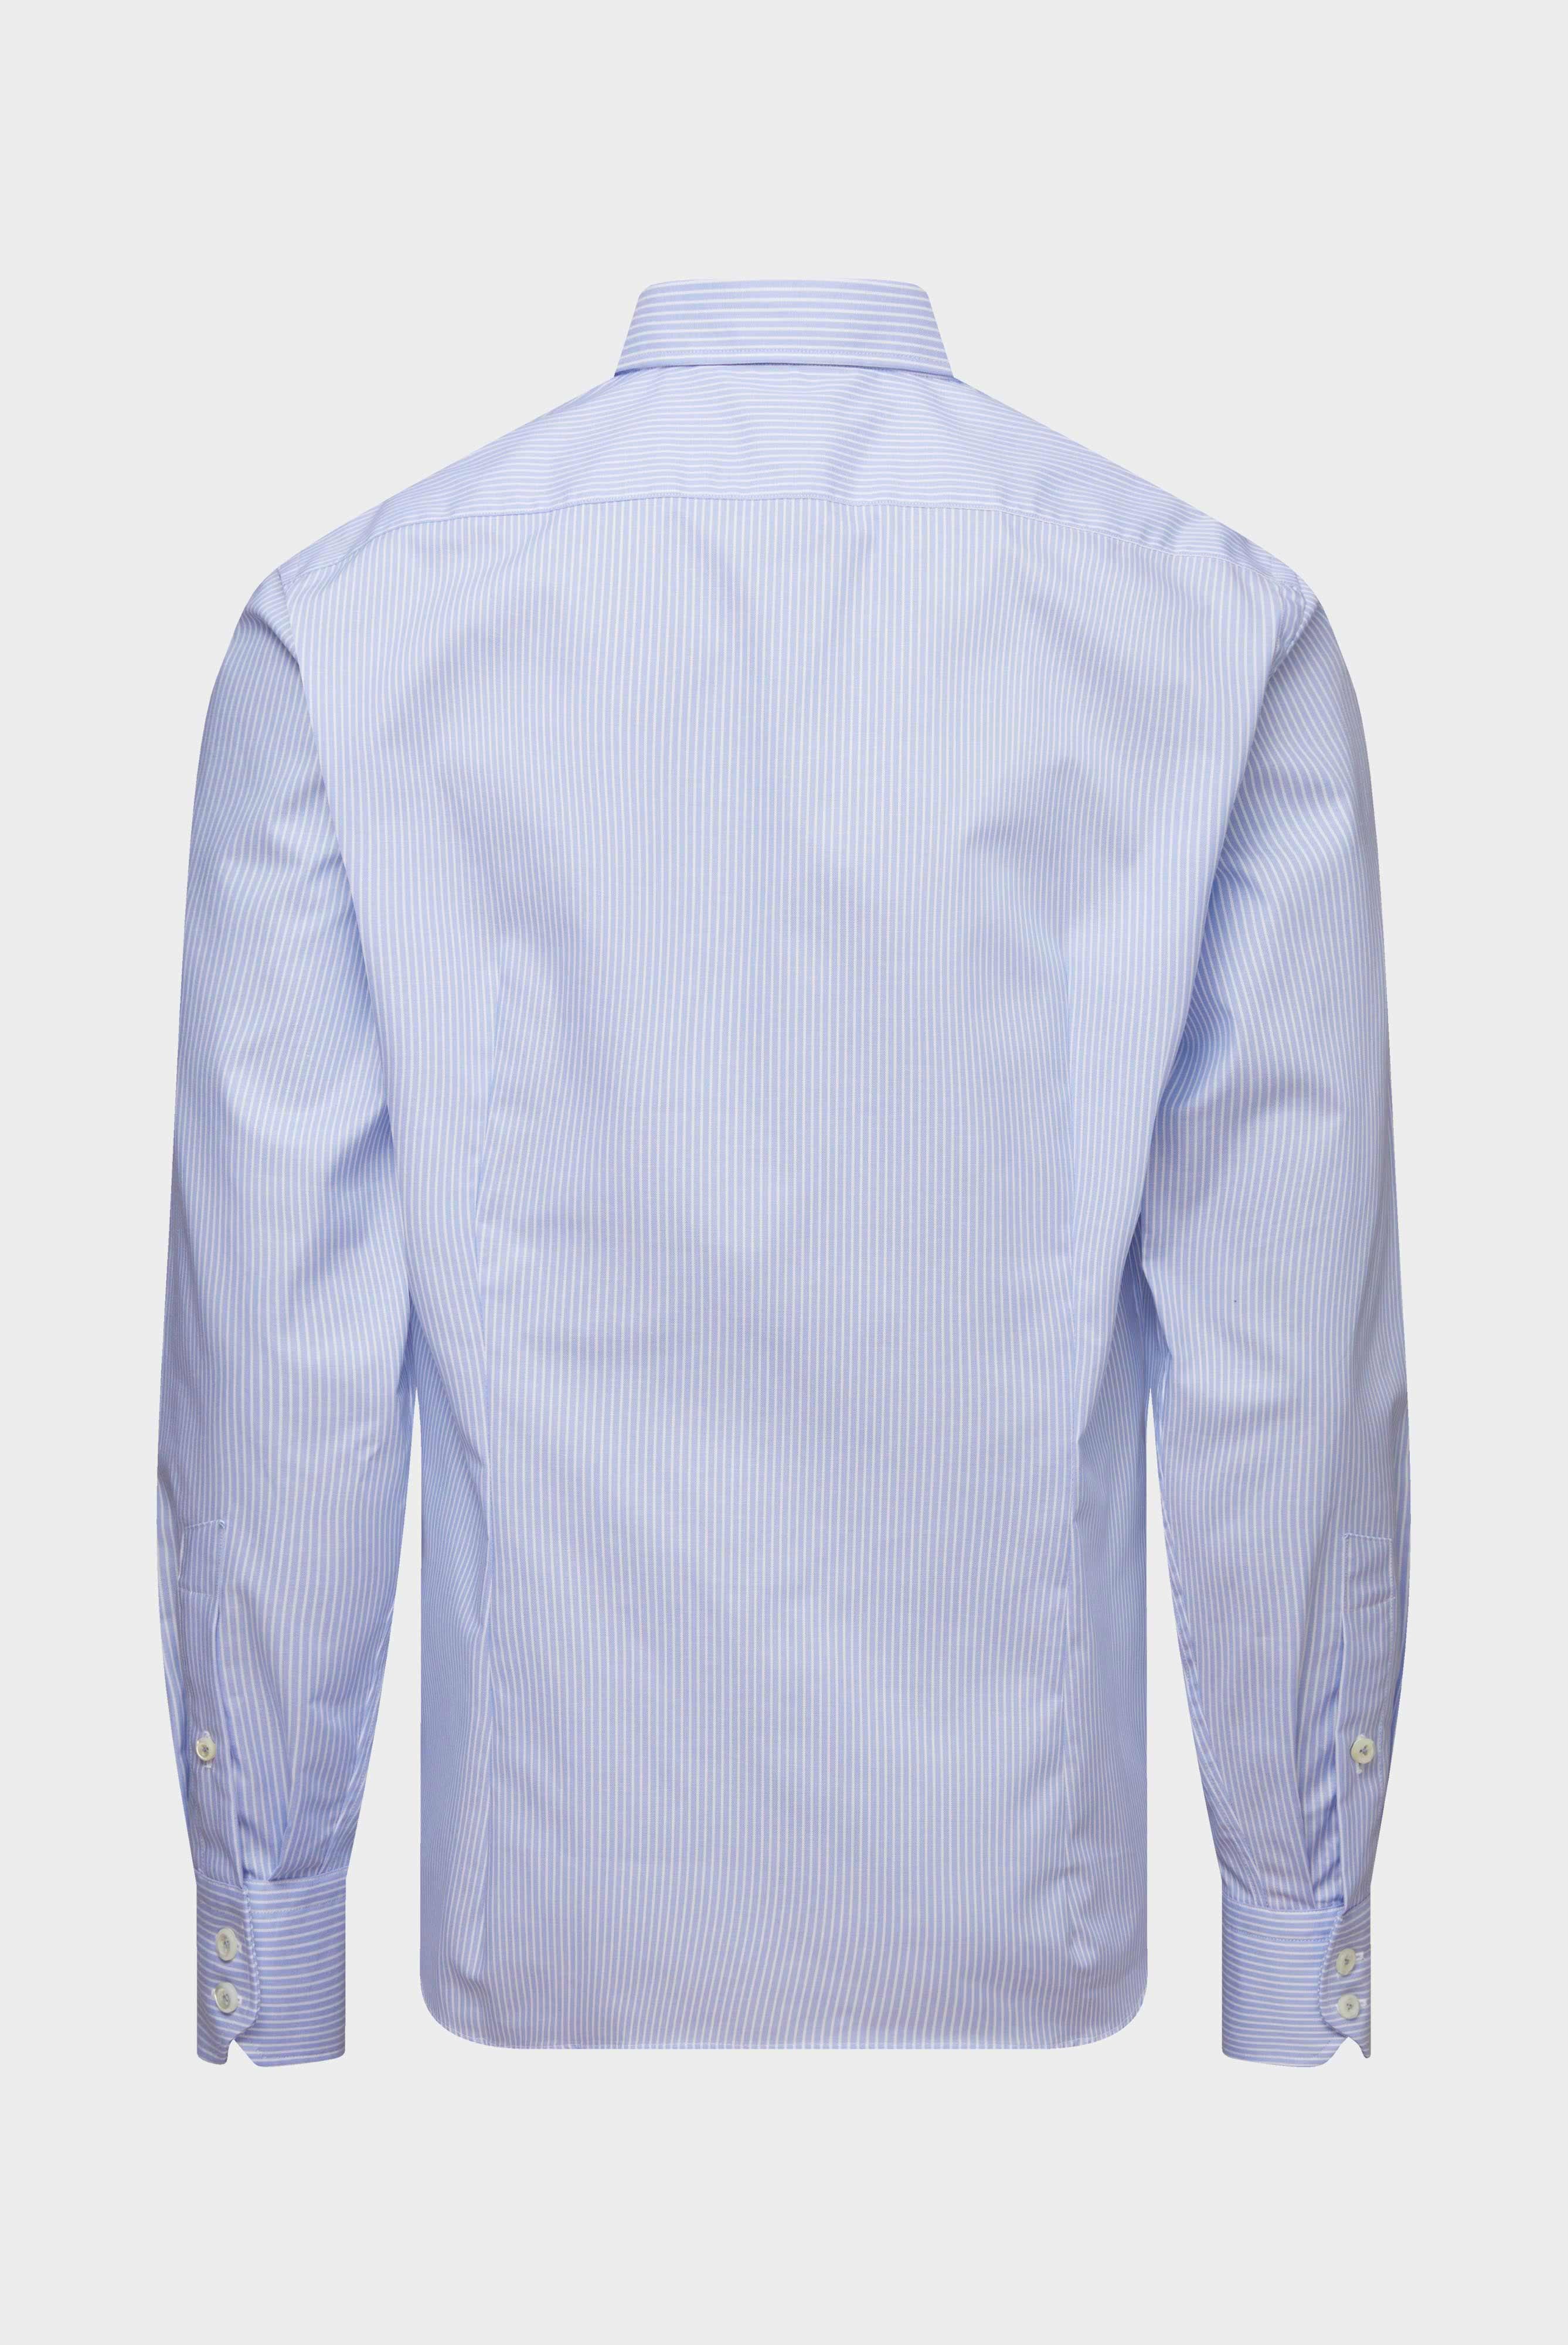 Easy Iron Shirts+Wrinkle-Free Shirt made of Organic Cotton+20.3281.NV.166007.730.37